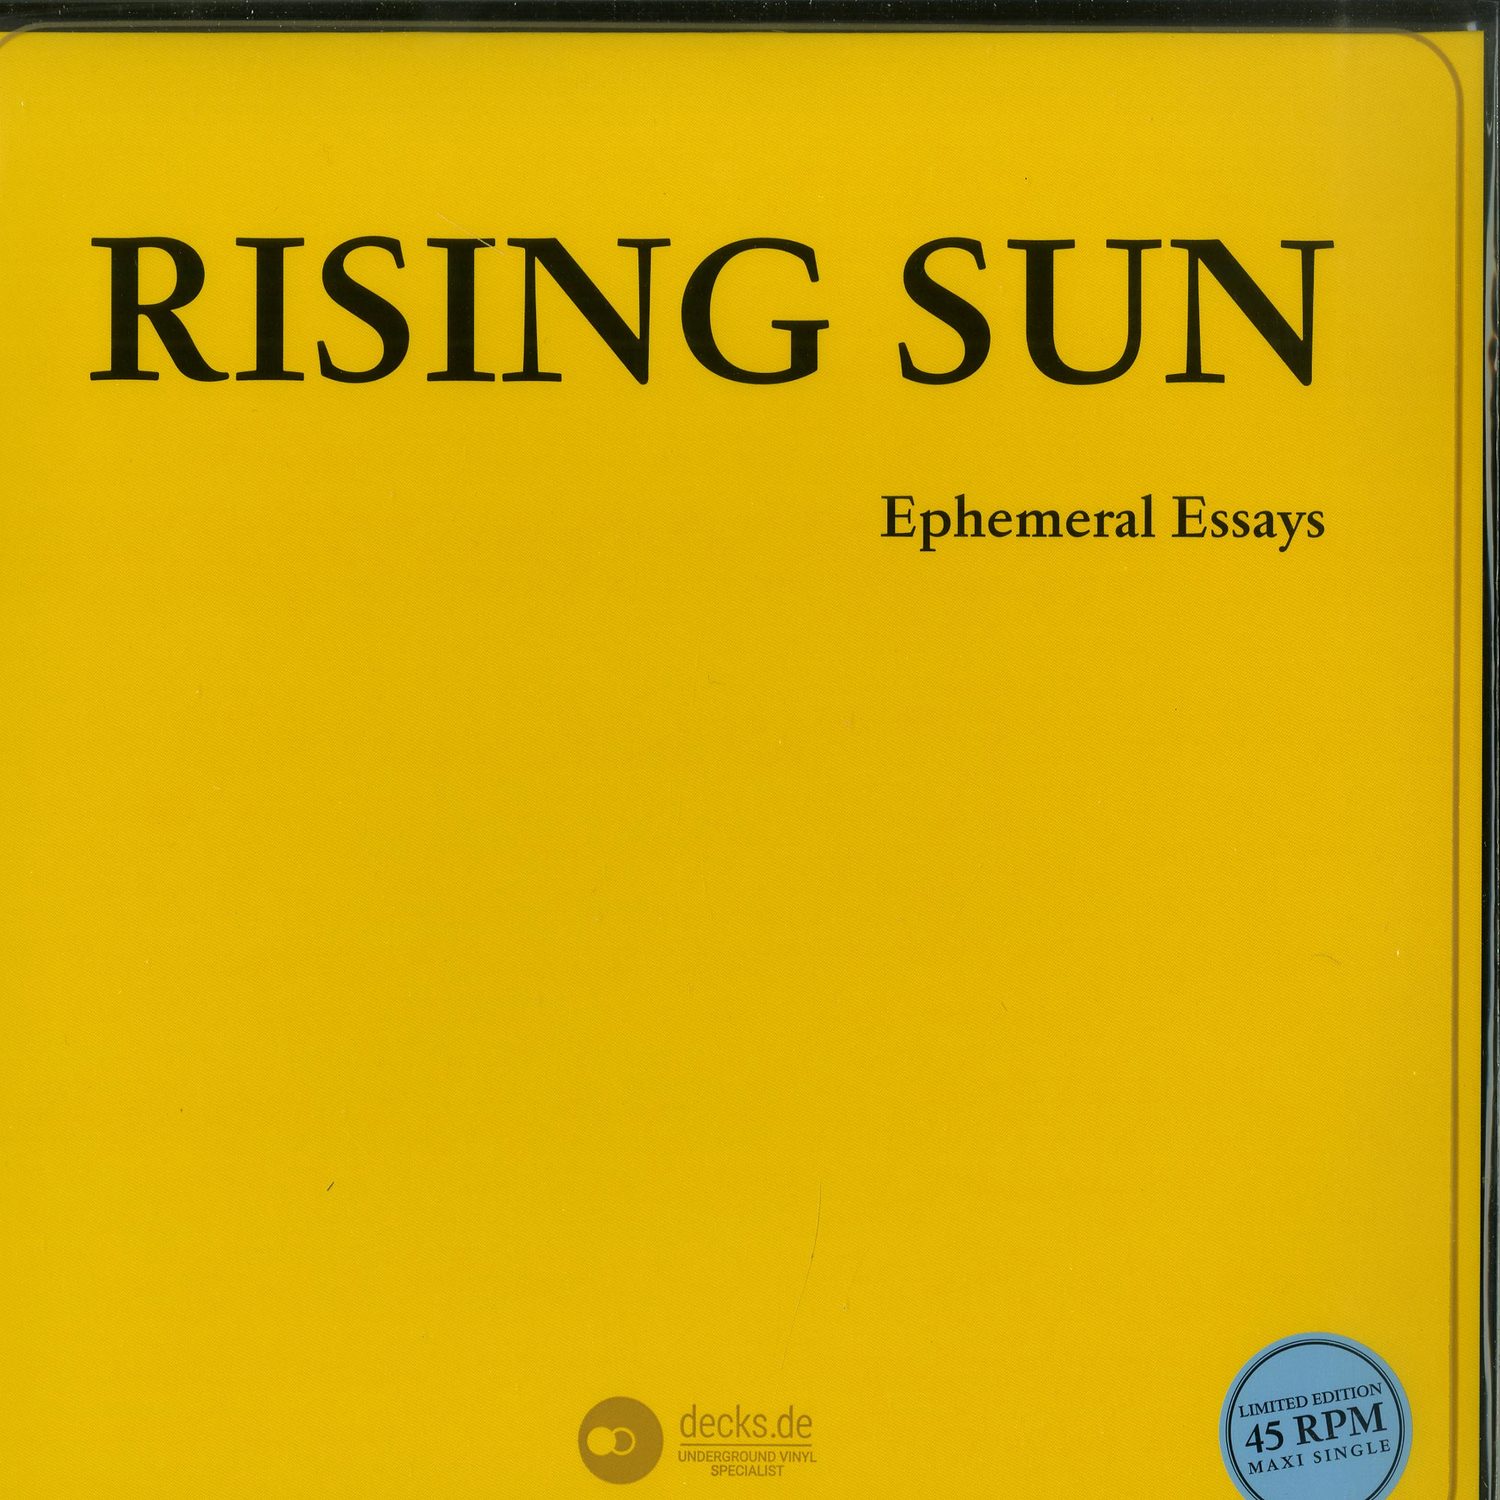 Rising Sun - EPHEMERAL ESSAYS 